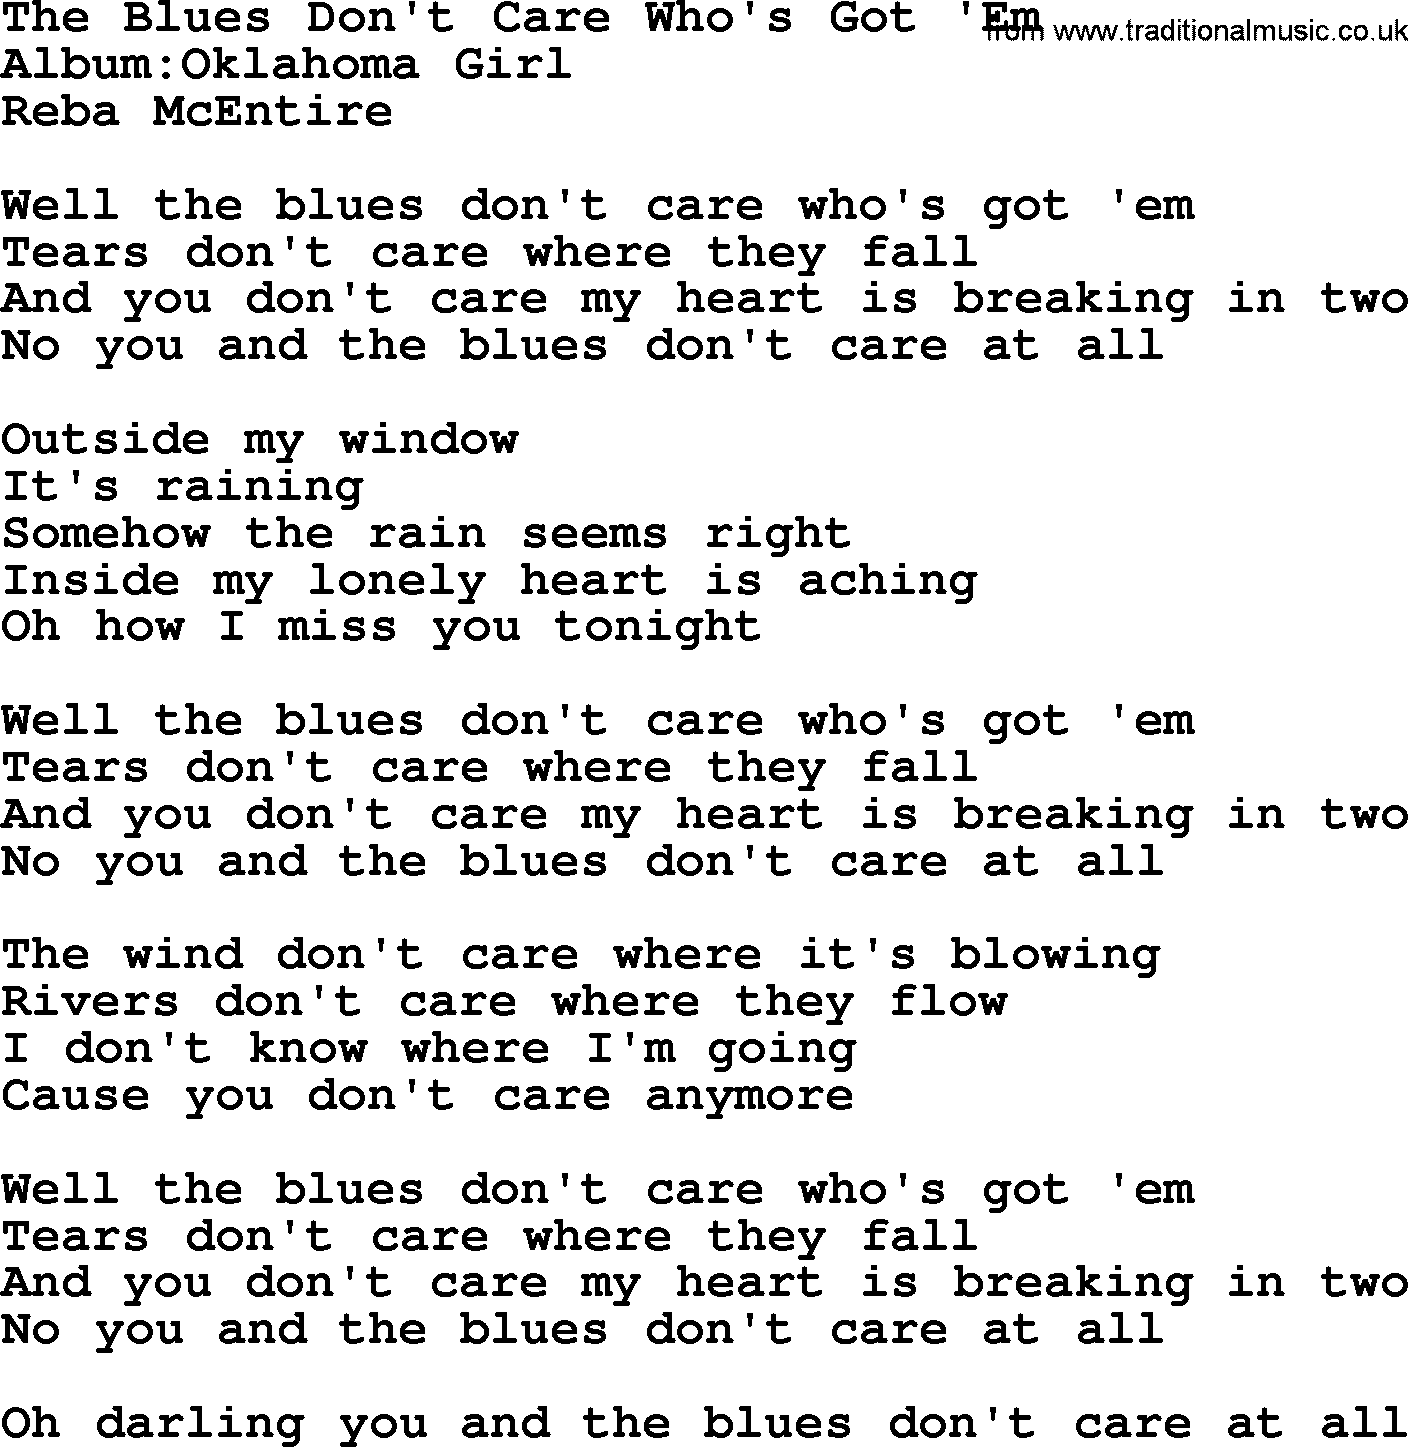 Reba McEntire song: The Blues Don't Care Who's Got 'Em lyrics